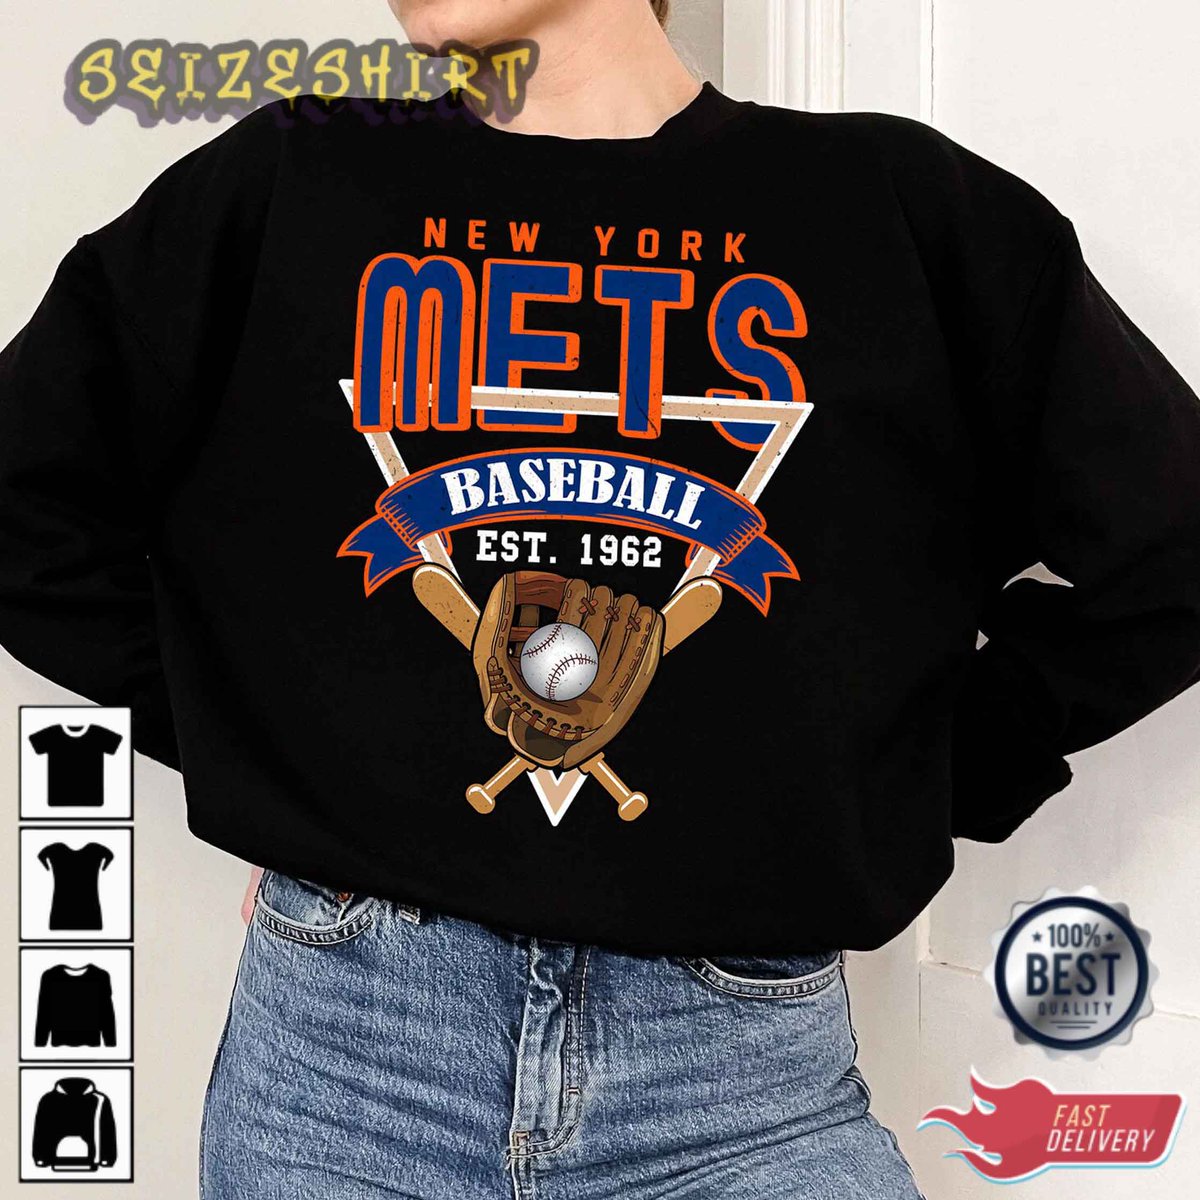 New York Mets Vintage Tee Shirt 
seizeshirt.com/mets-new-york-… 
#ATLvsNYM #NewYorkMets #Mets #IYKNYYK #LGM #MLB #Baseball #Trending #Seizeshirt